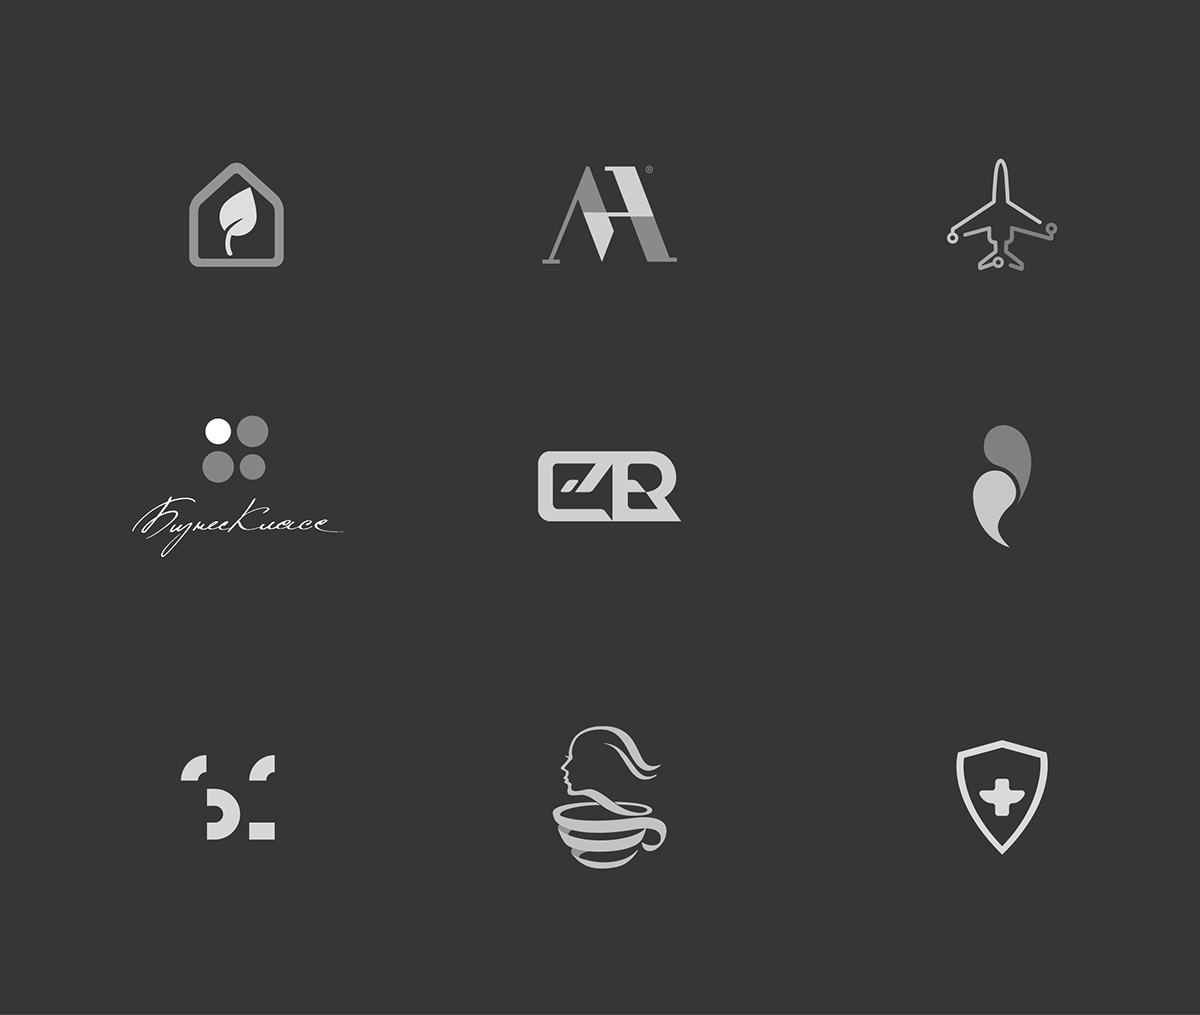 Logotype логотипы фирменный стиль corporate style логотип logo identity Визуальная идентификация visual identity корпоративный стиль